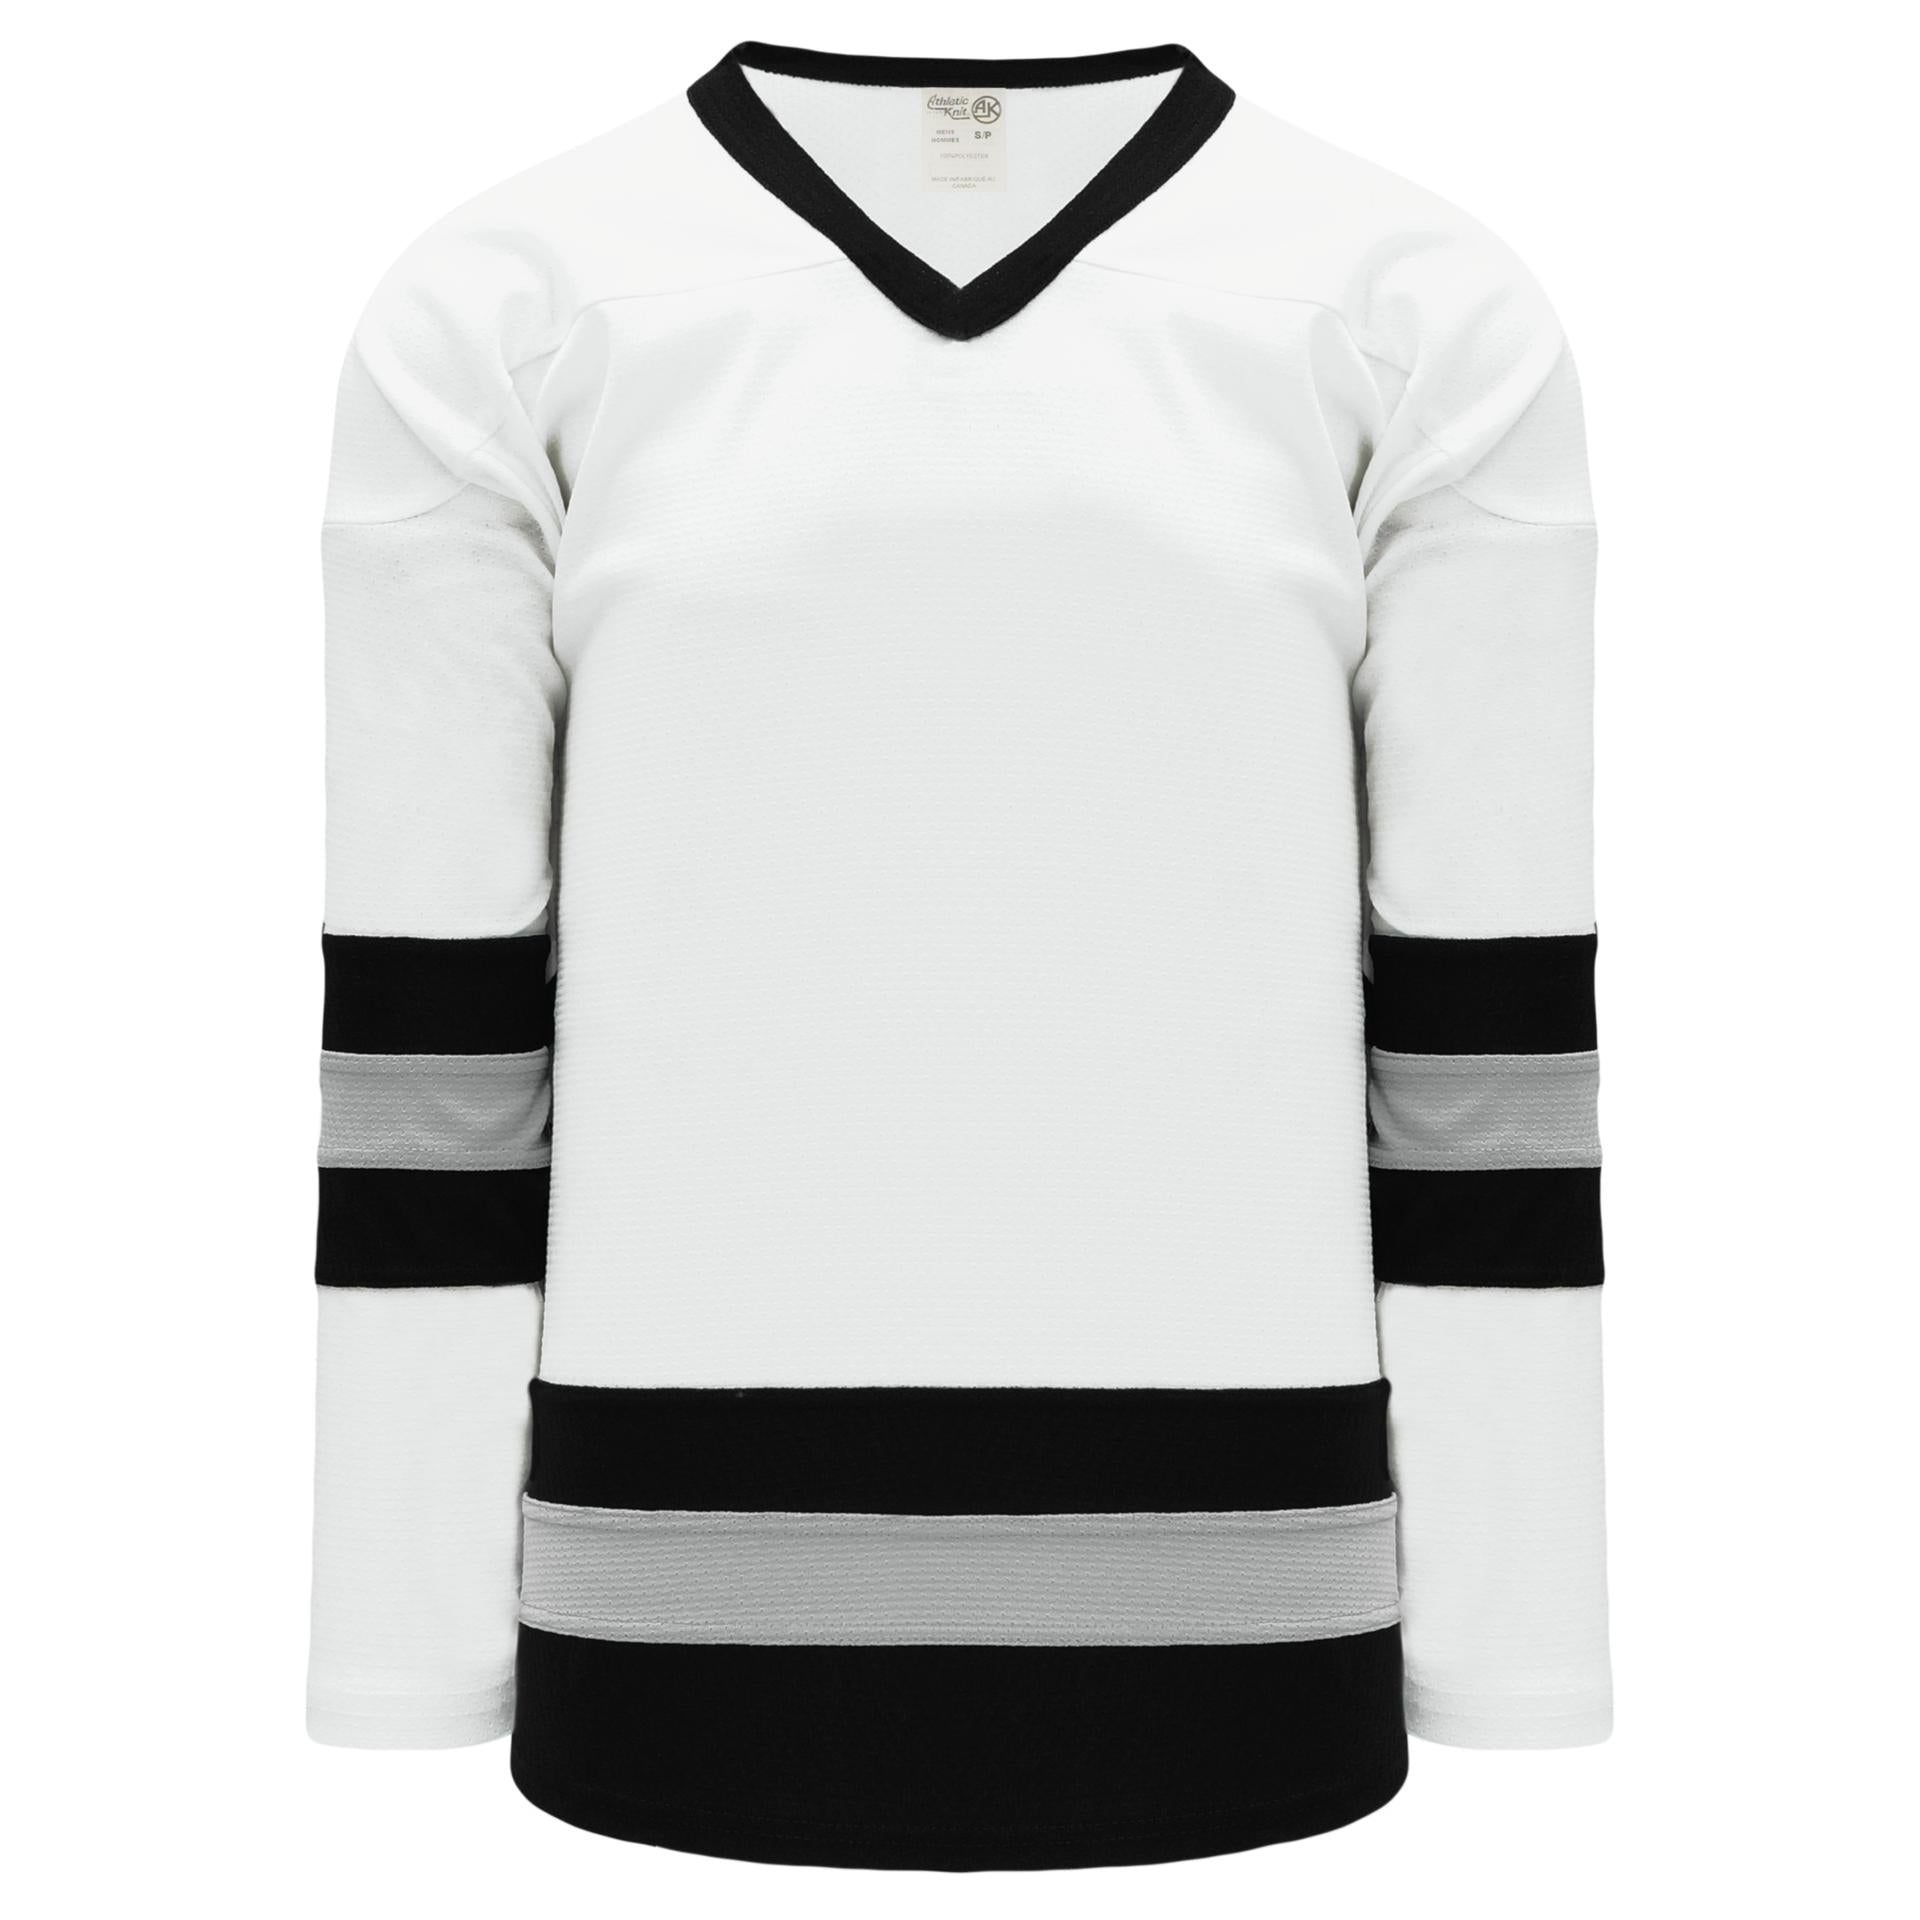 blank white hockey jersey